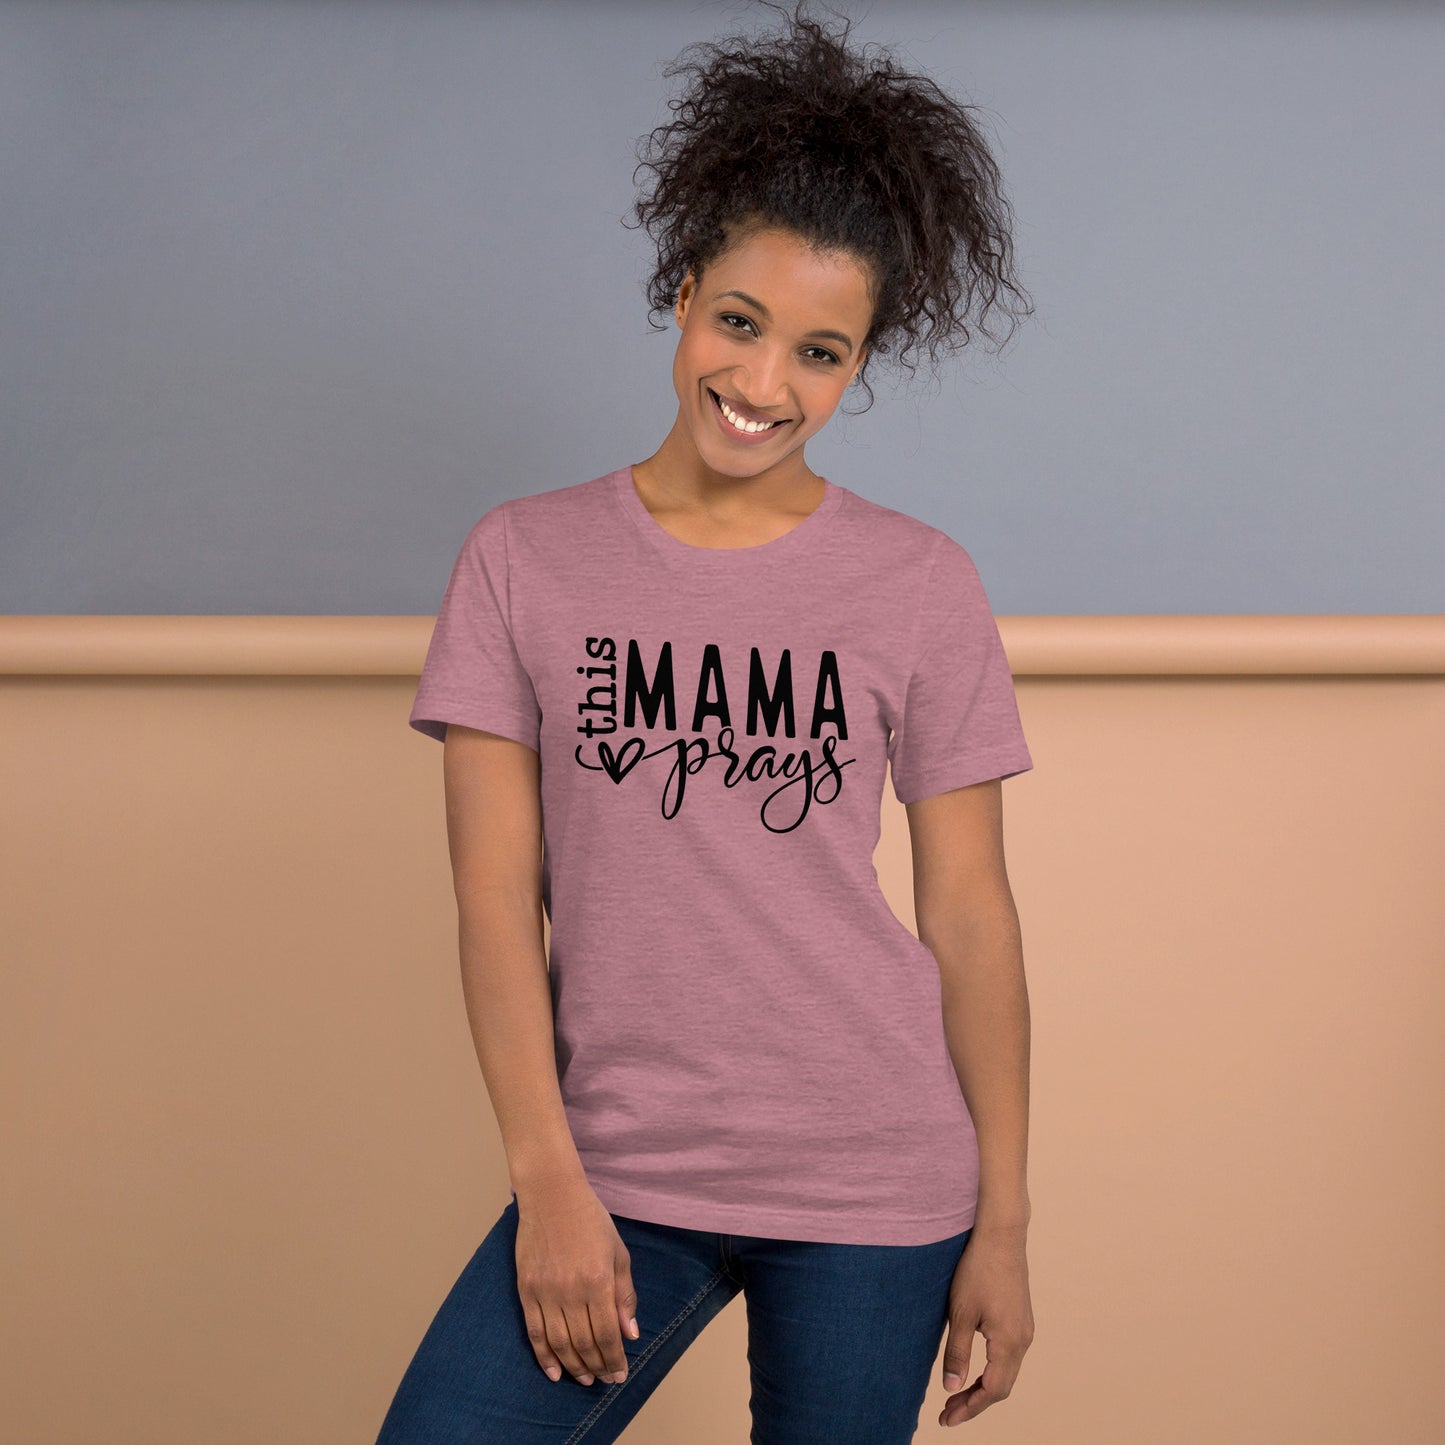 This Mama Prays Short Sleeve T-Shirt